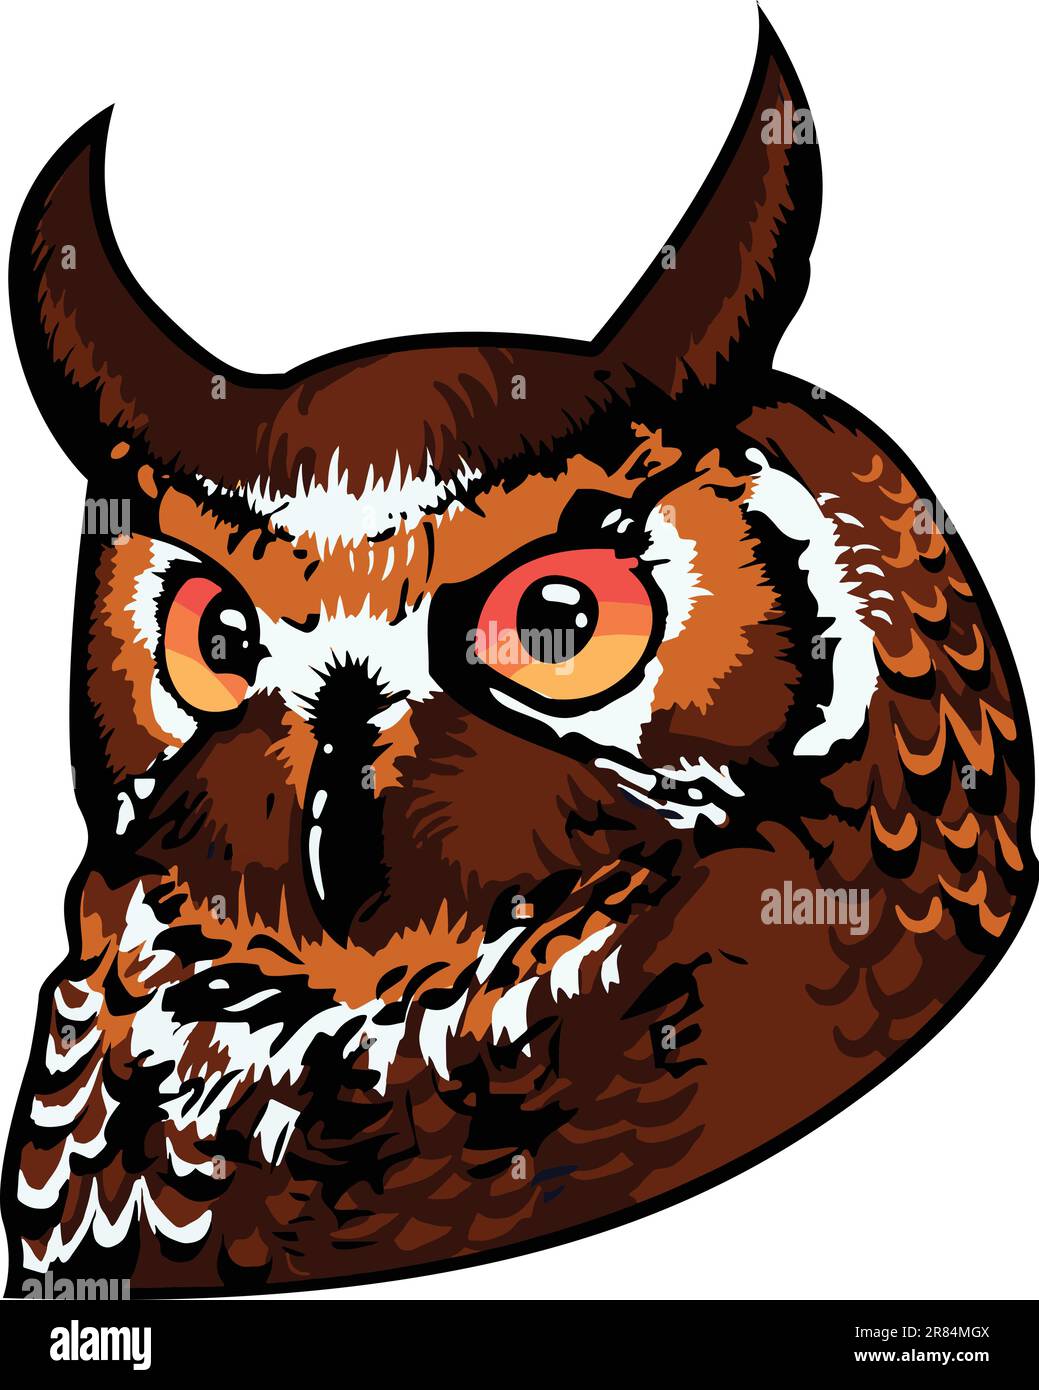 Owl Face Illustration. Sky. Forest. Vector Stock Vector